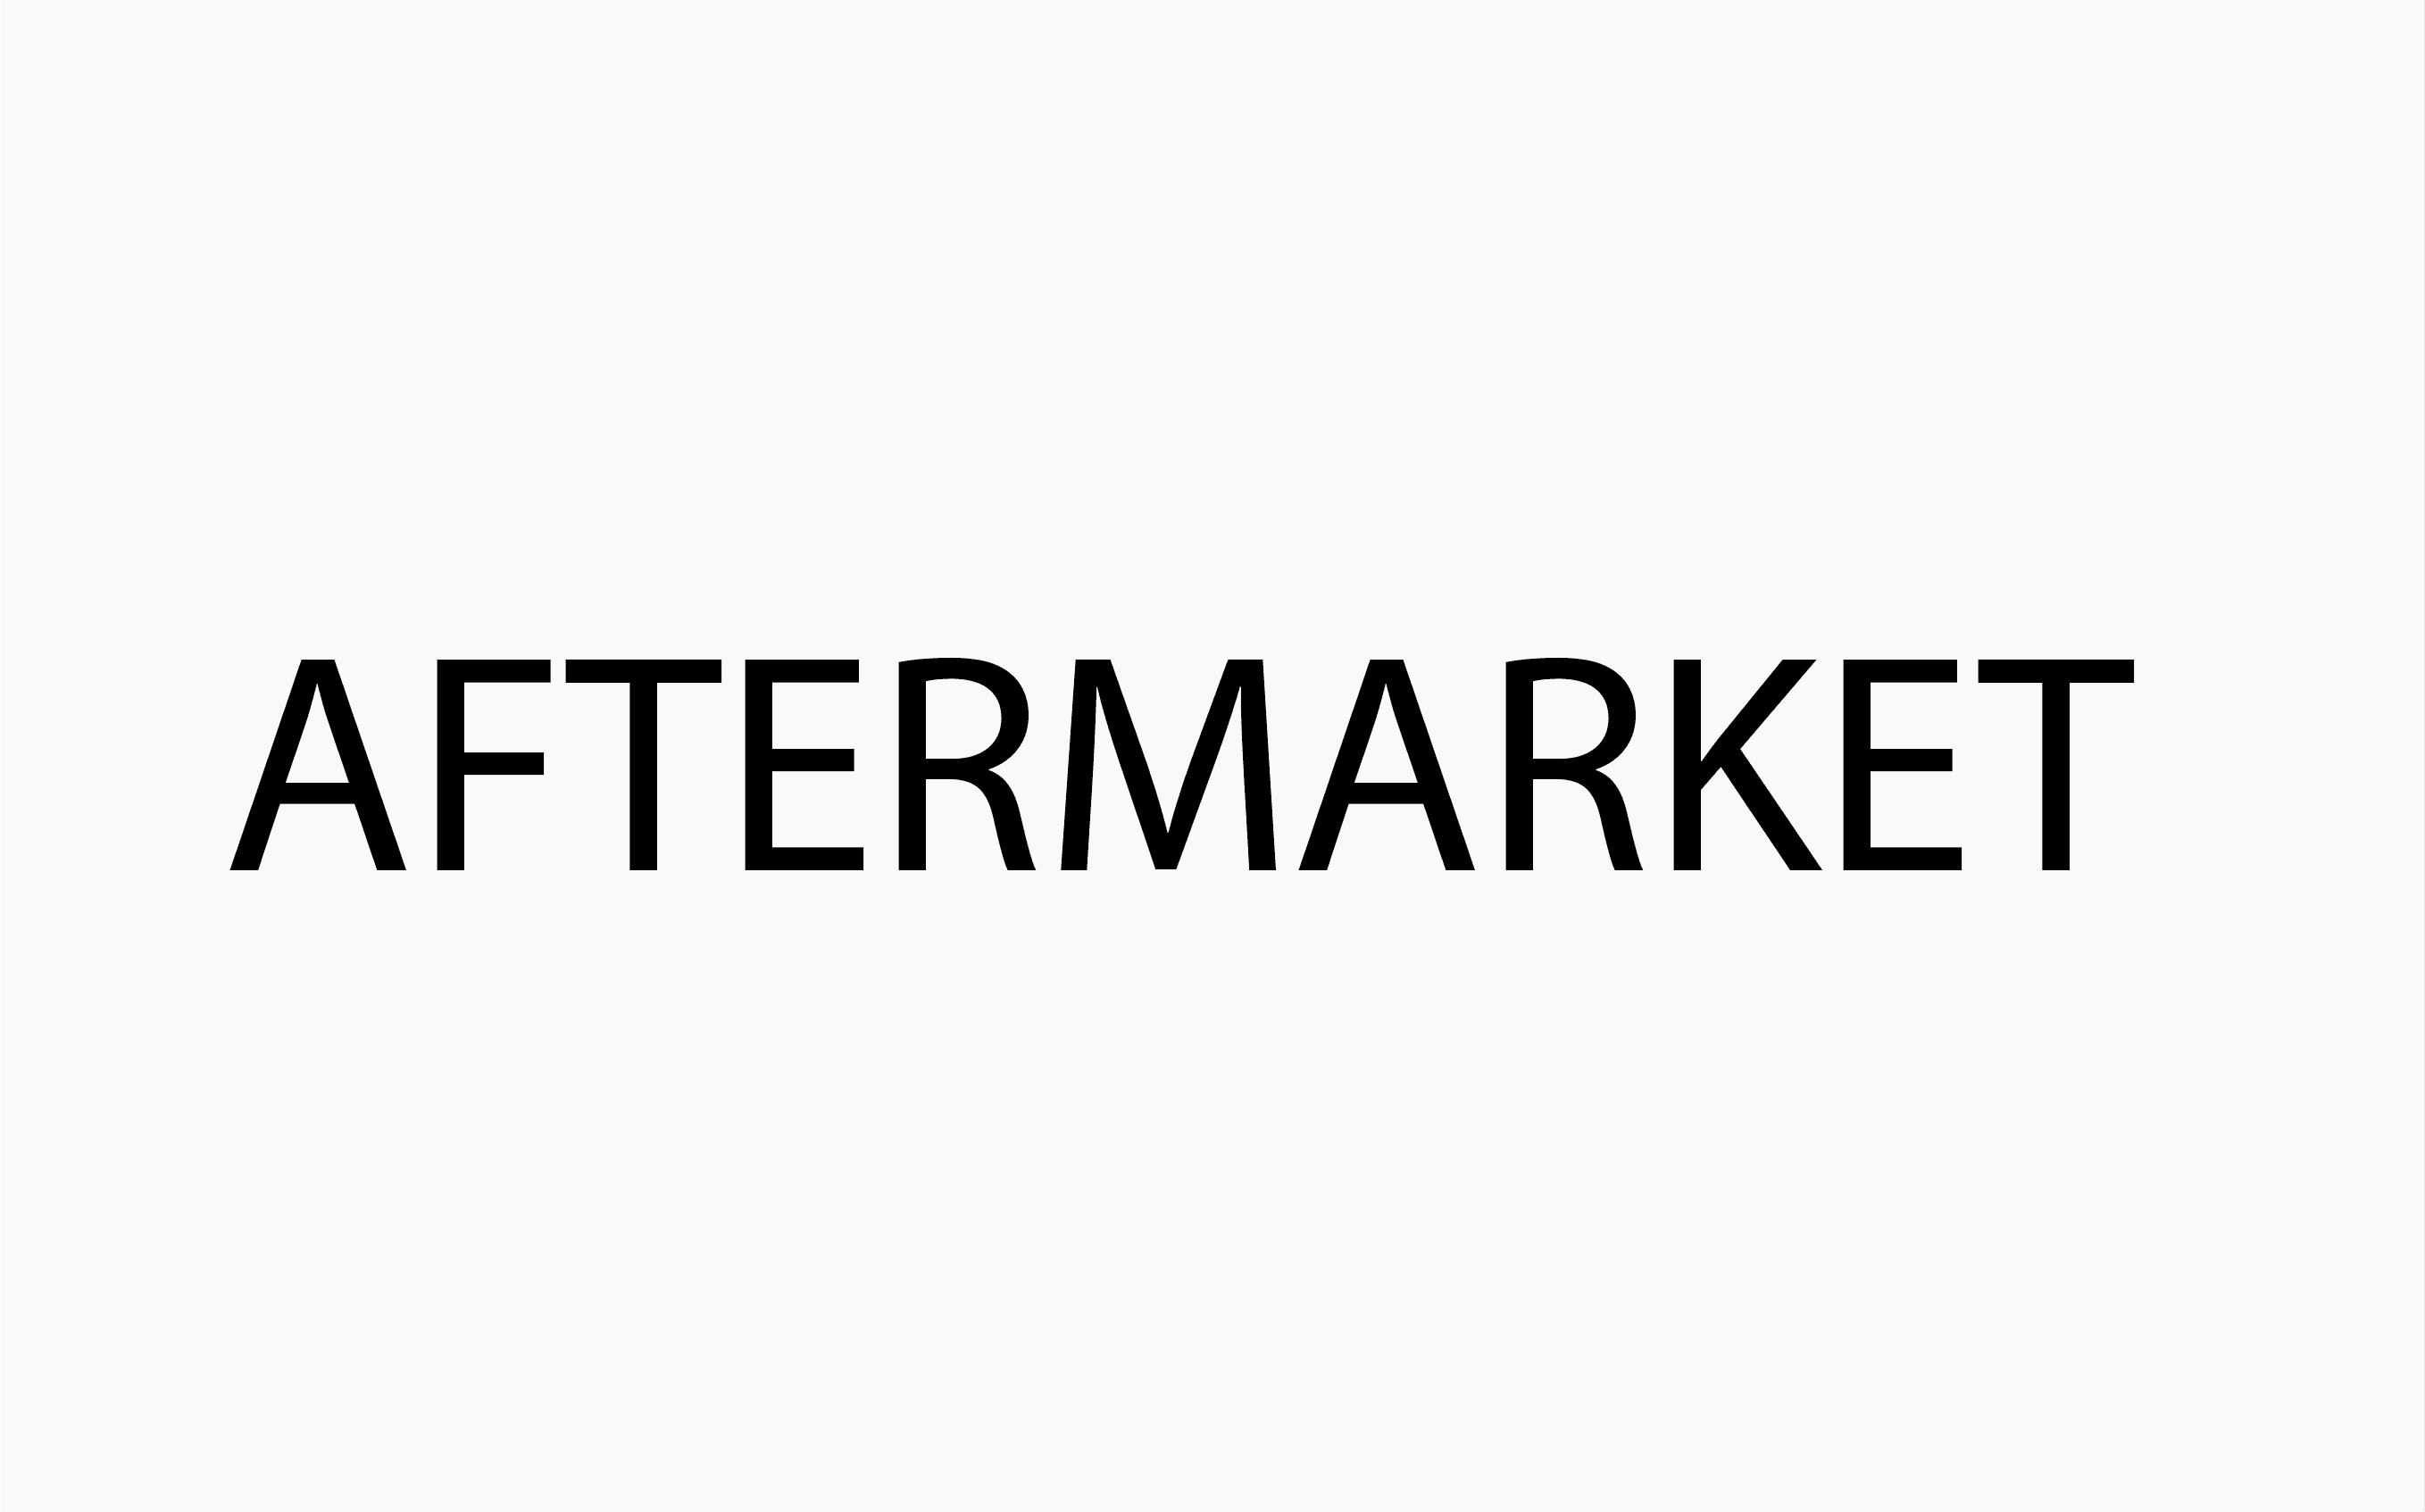 Aftermarket no brand category